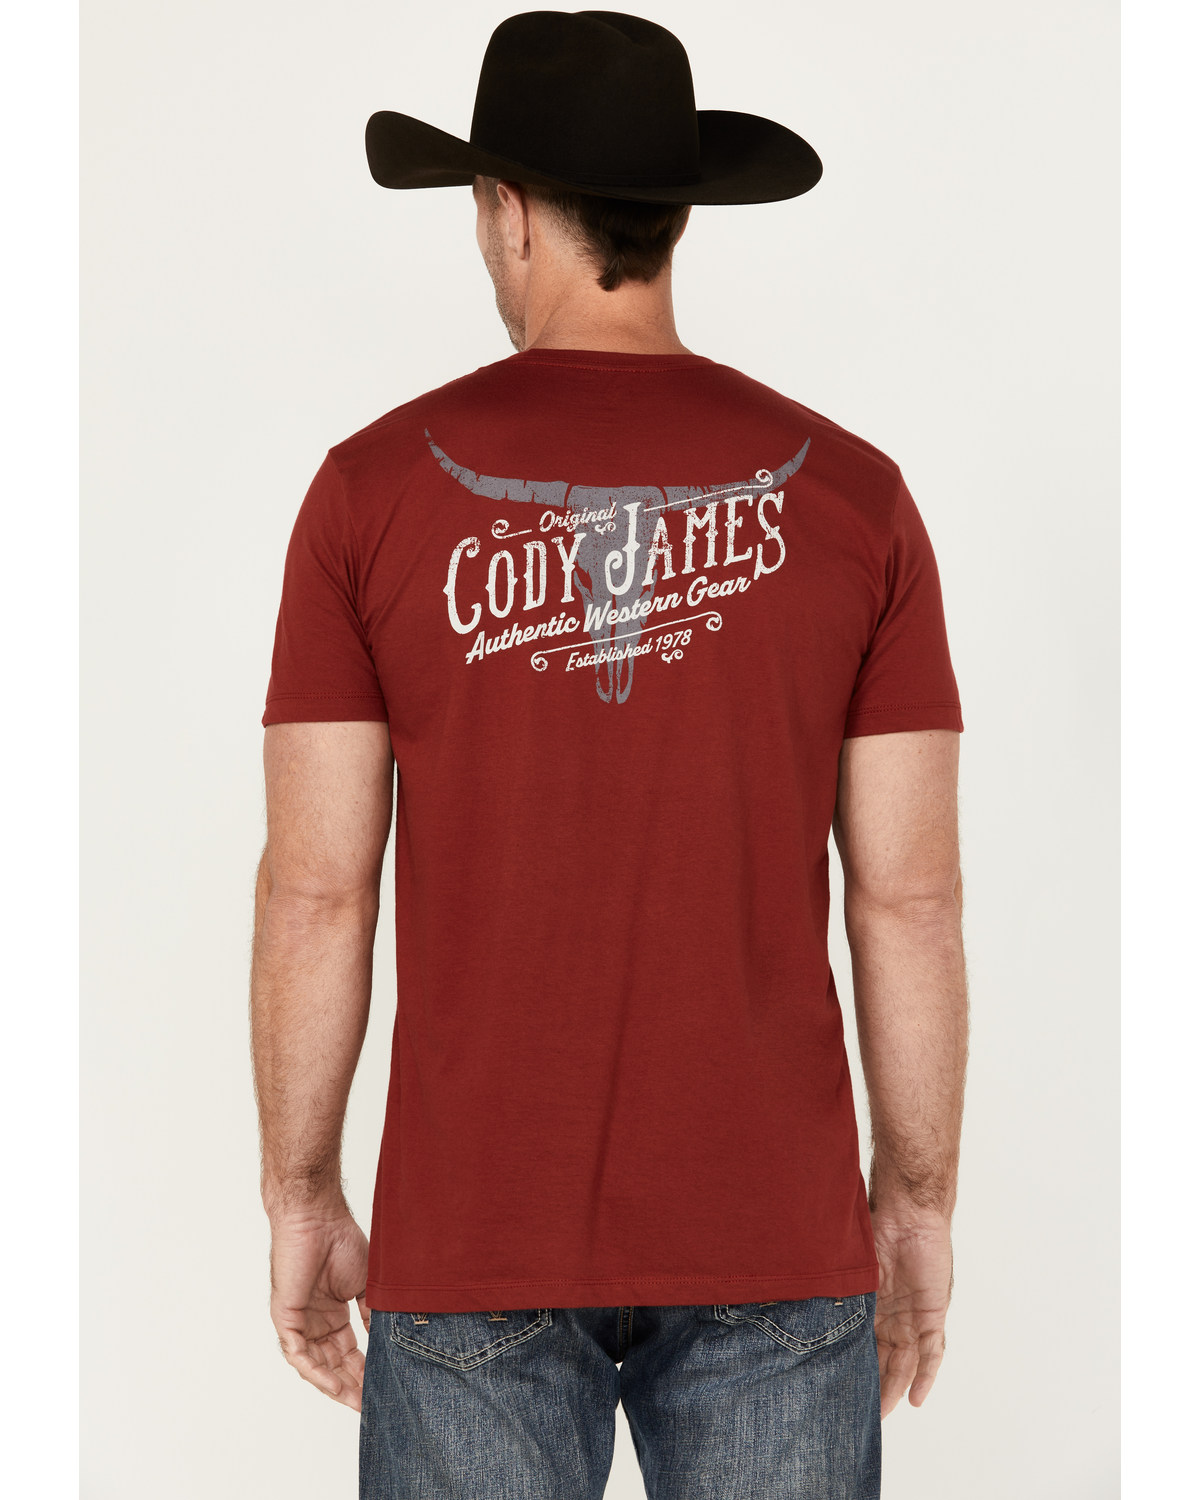 Cody James Men's Long Horn Short Sleeve Graphic T-Shirt